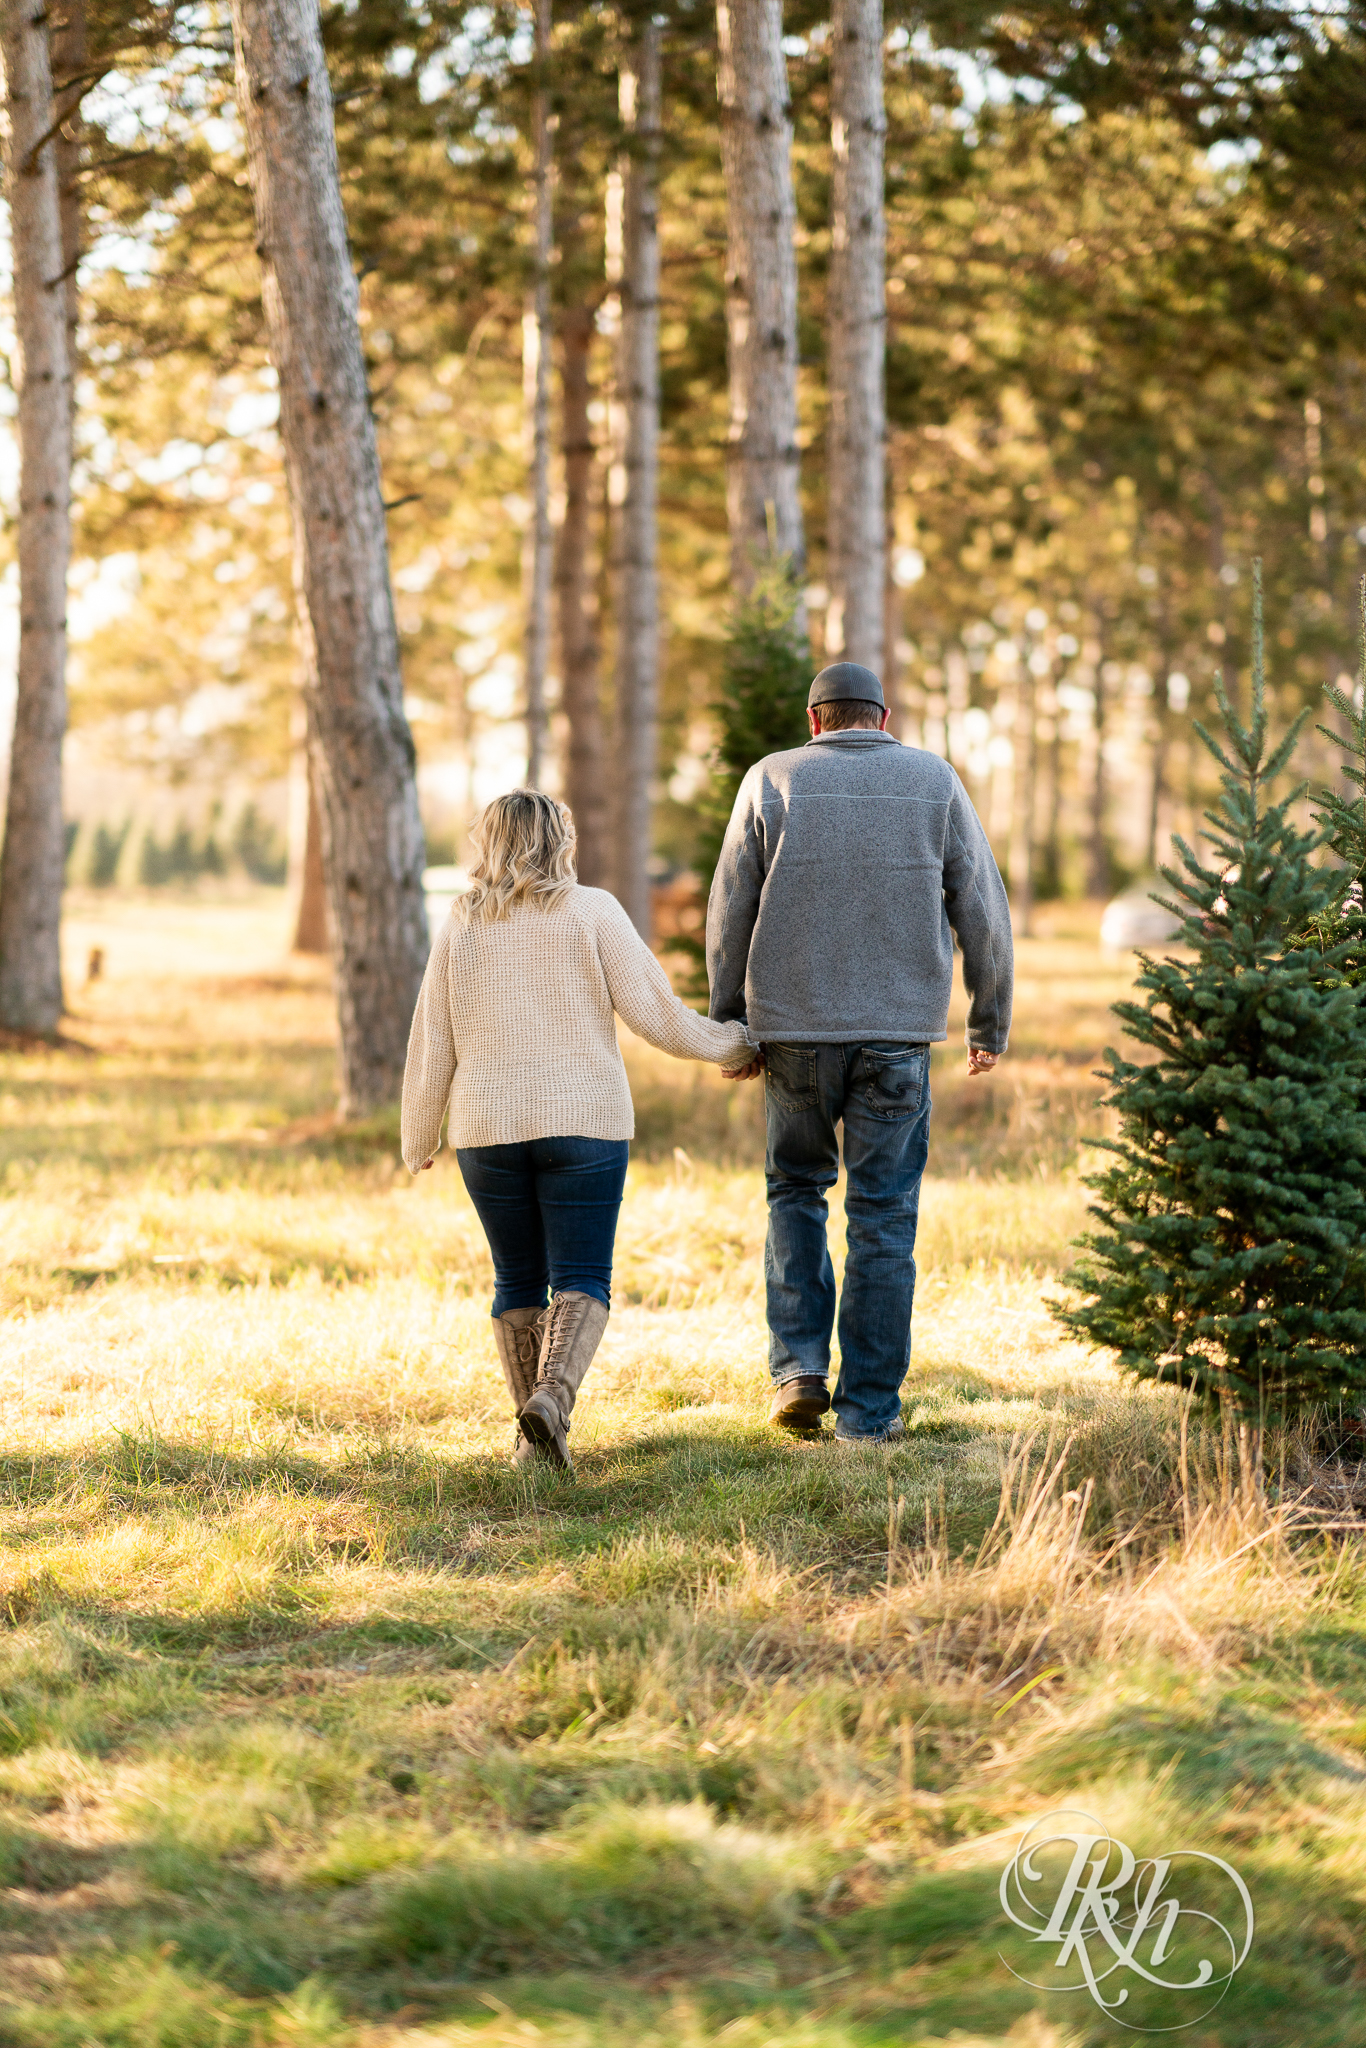 Man and woman walking in sunlight in between trees at Hansen Tree Farm in Anoka, Minnesota.